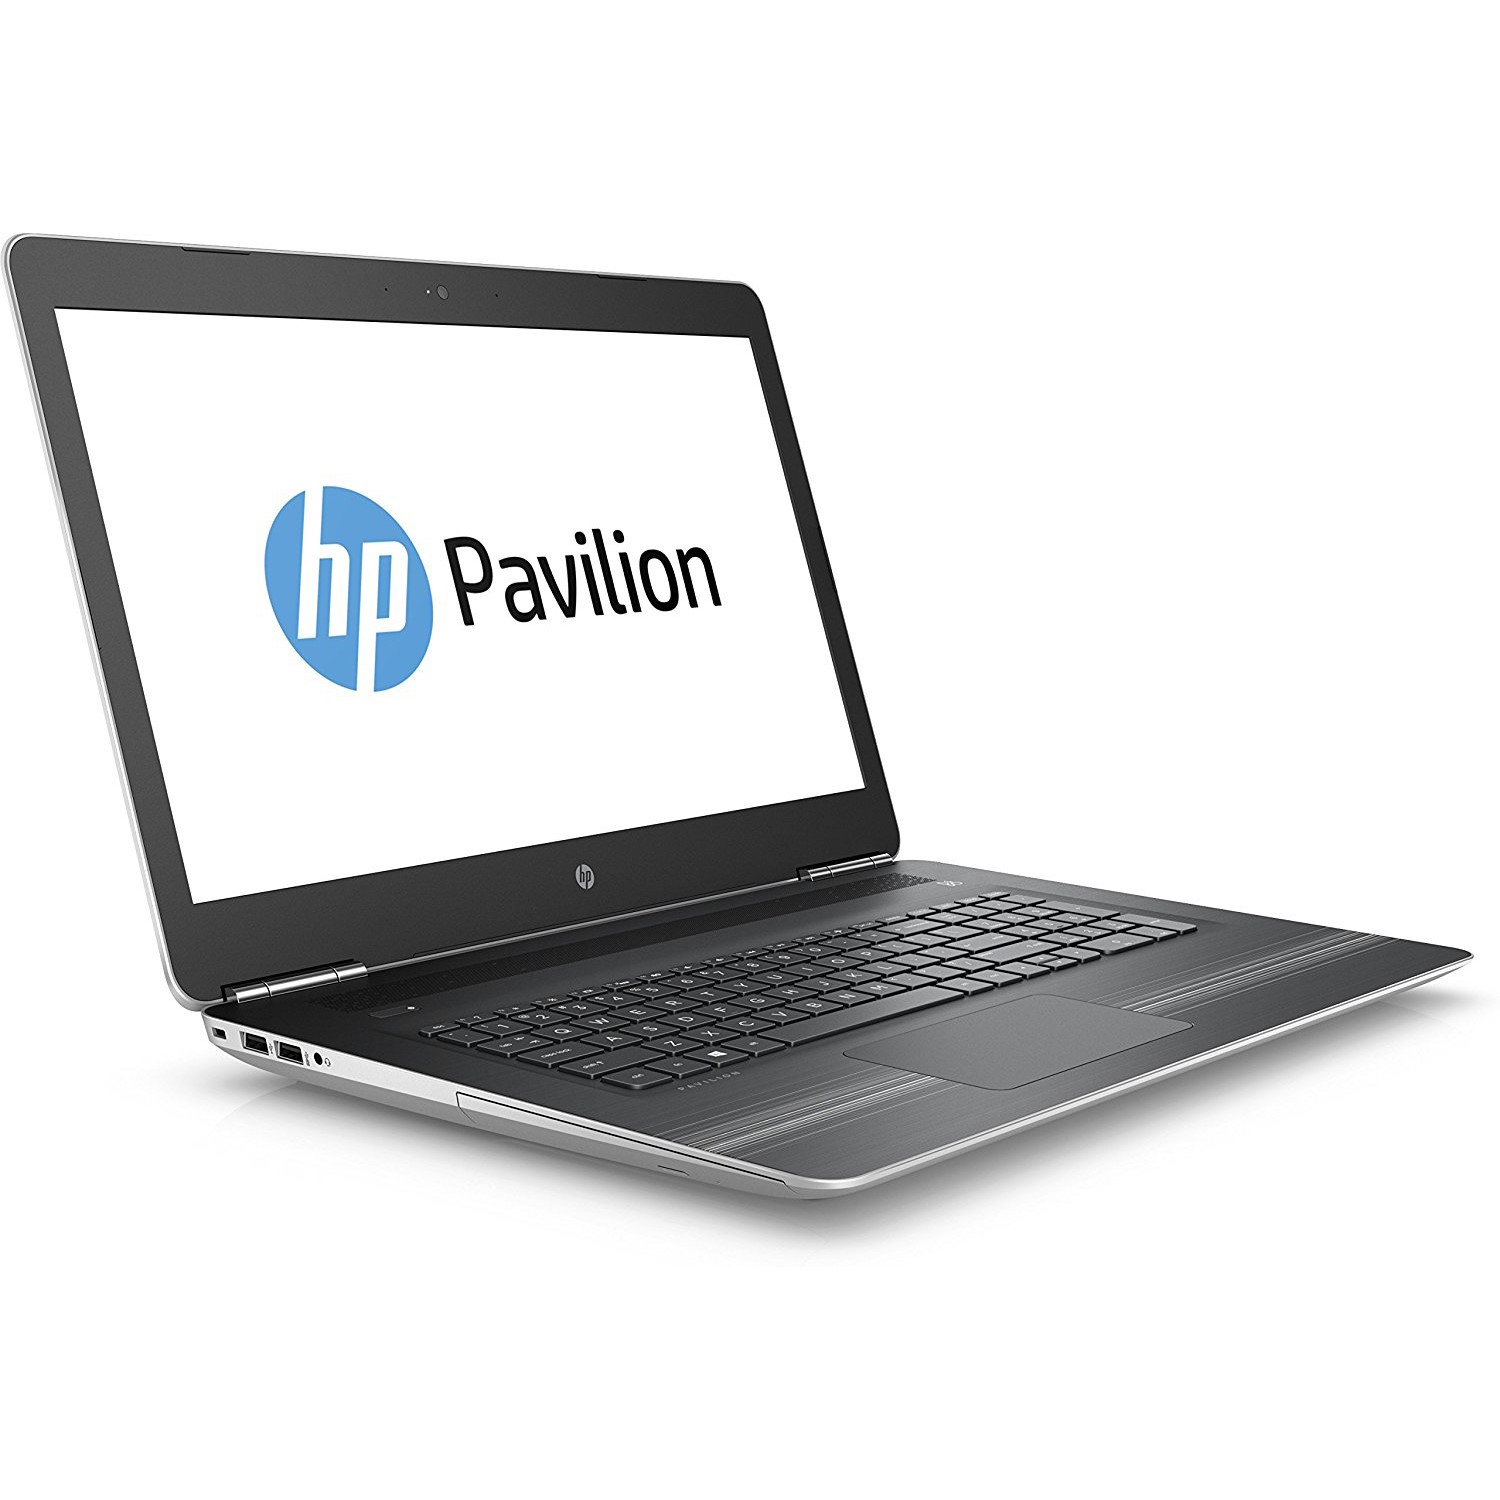 Refurbished Hp Pavilion 17 Ab051na 17 3 Intel Core I7 6700hq 2 6ghz 8gb 1tb Dvd Sm Nvidia Geforce Gtx 960m 4gb Graphics Windows 10 Gaming Laptop Laptops Direct